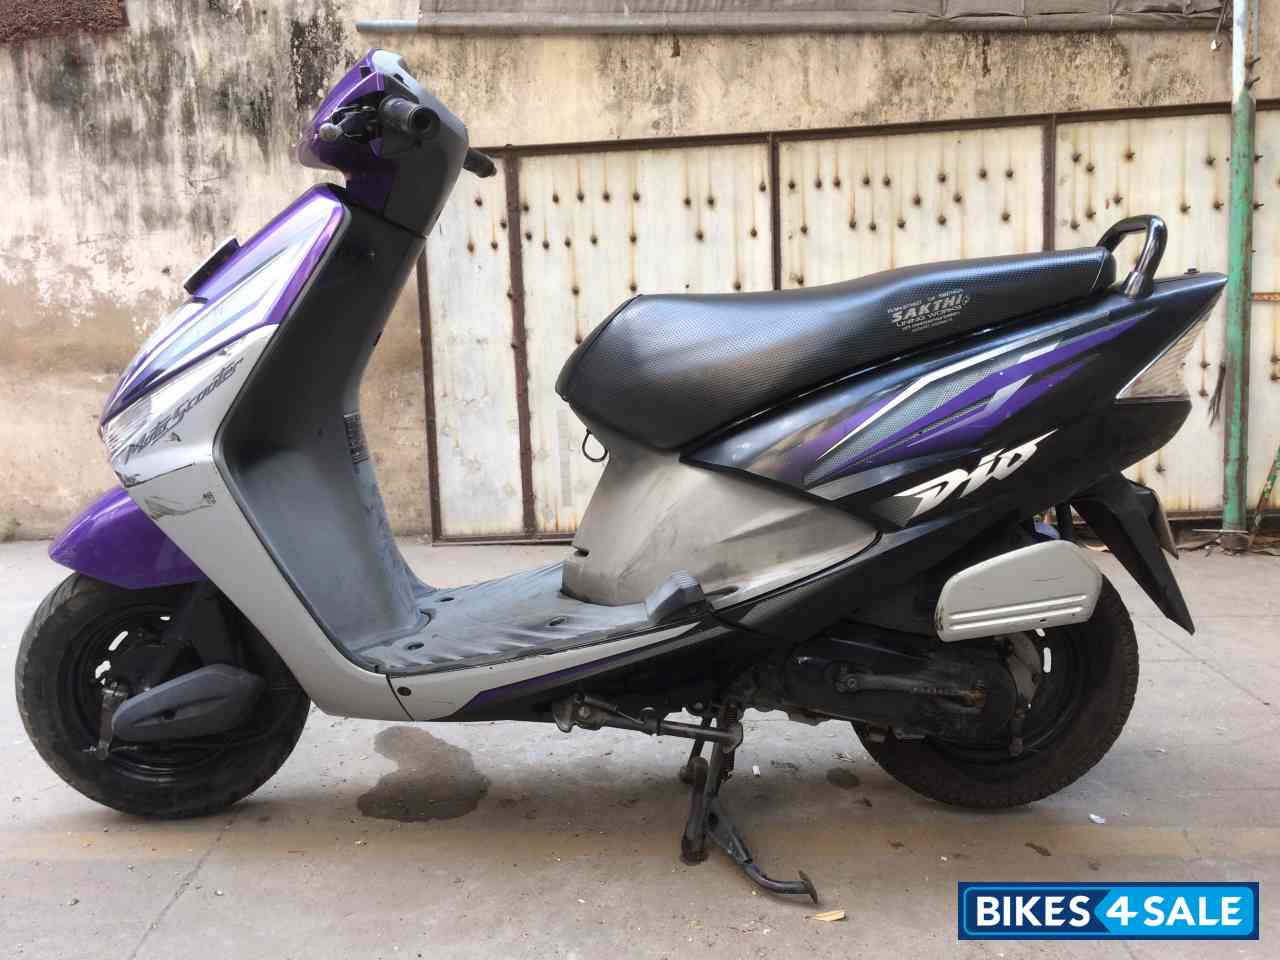 Dio Bike New Model Price In Chennai